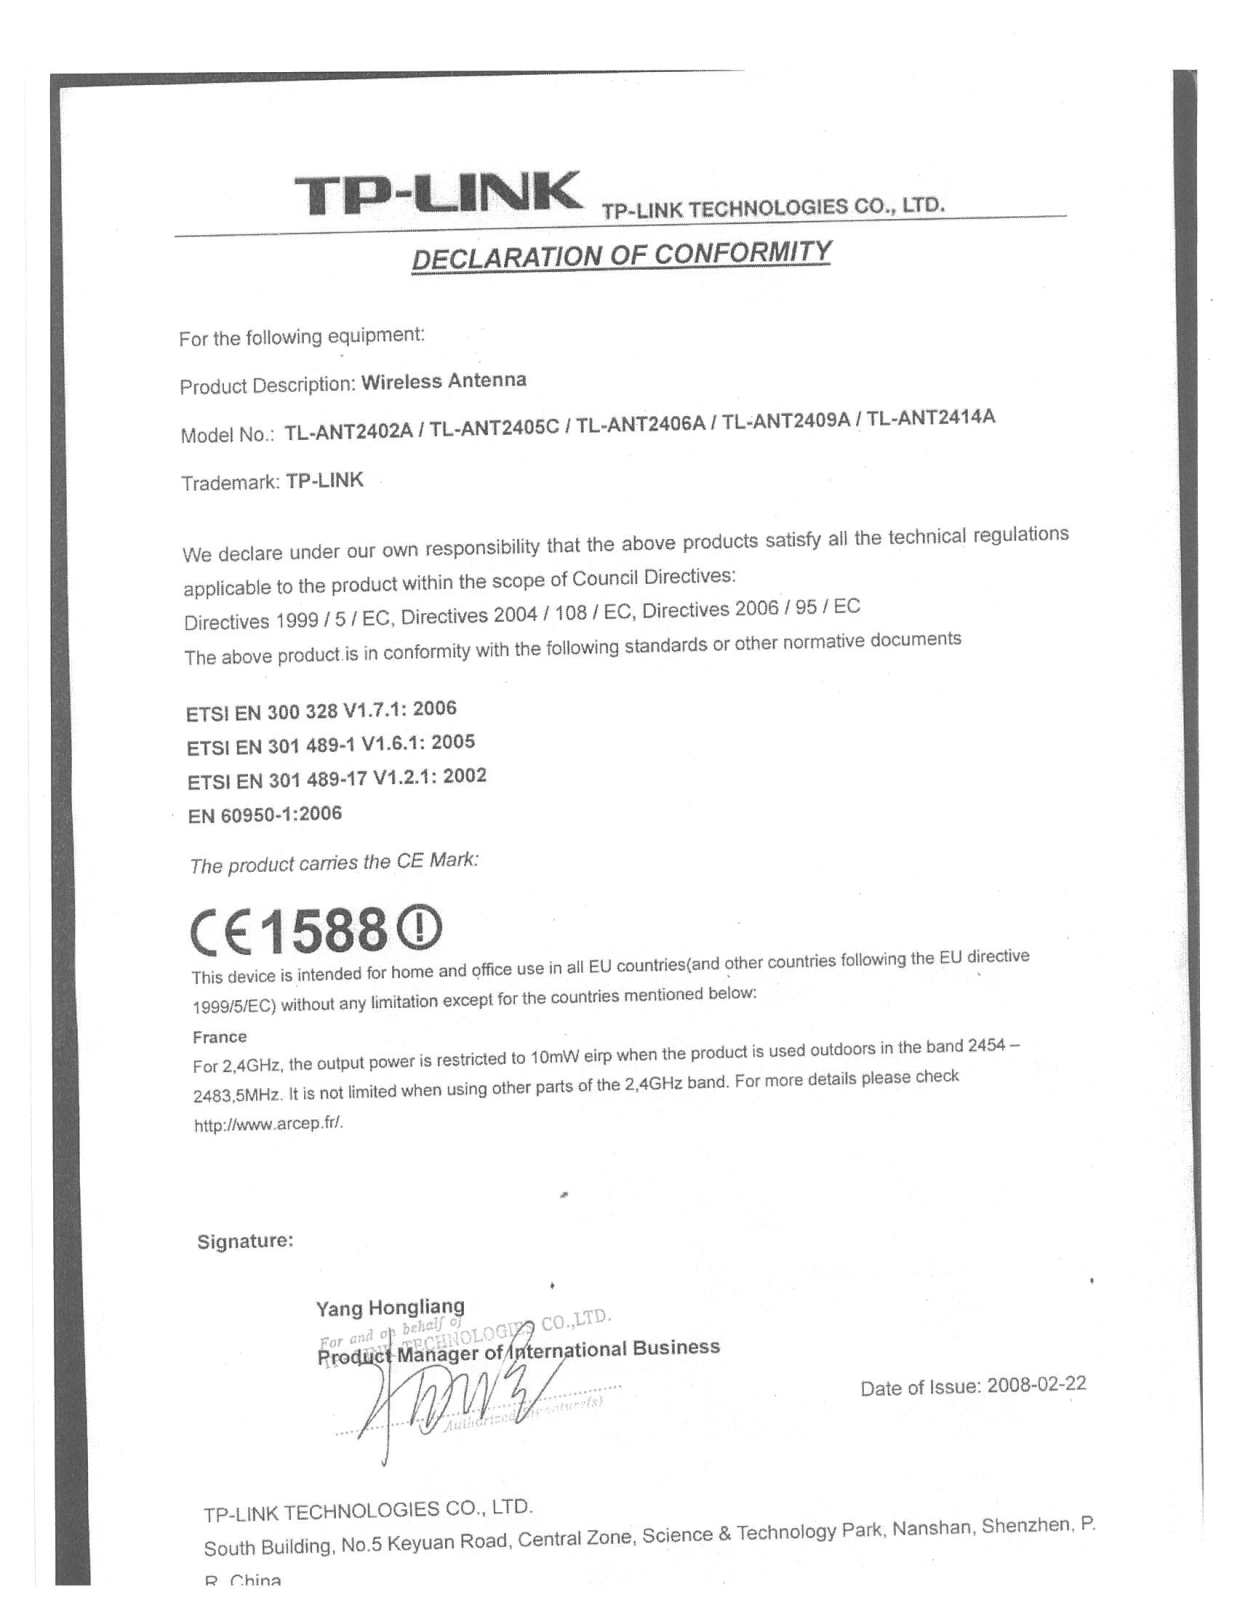 TP-Link TL-ANT2409A, TL-ANT2405C Declaration of Conformity